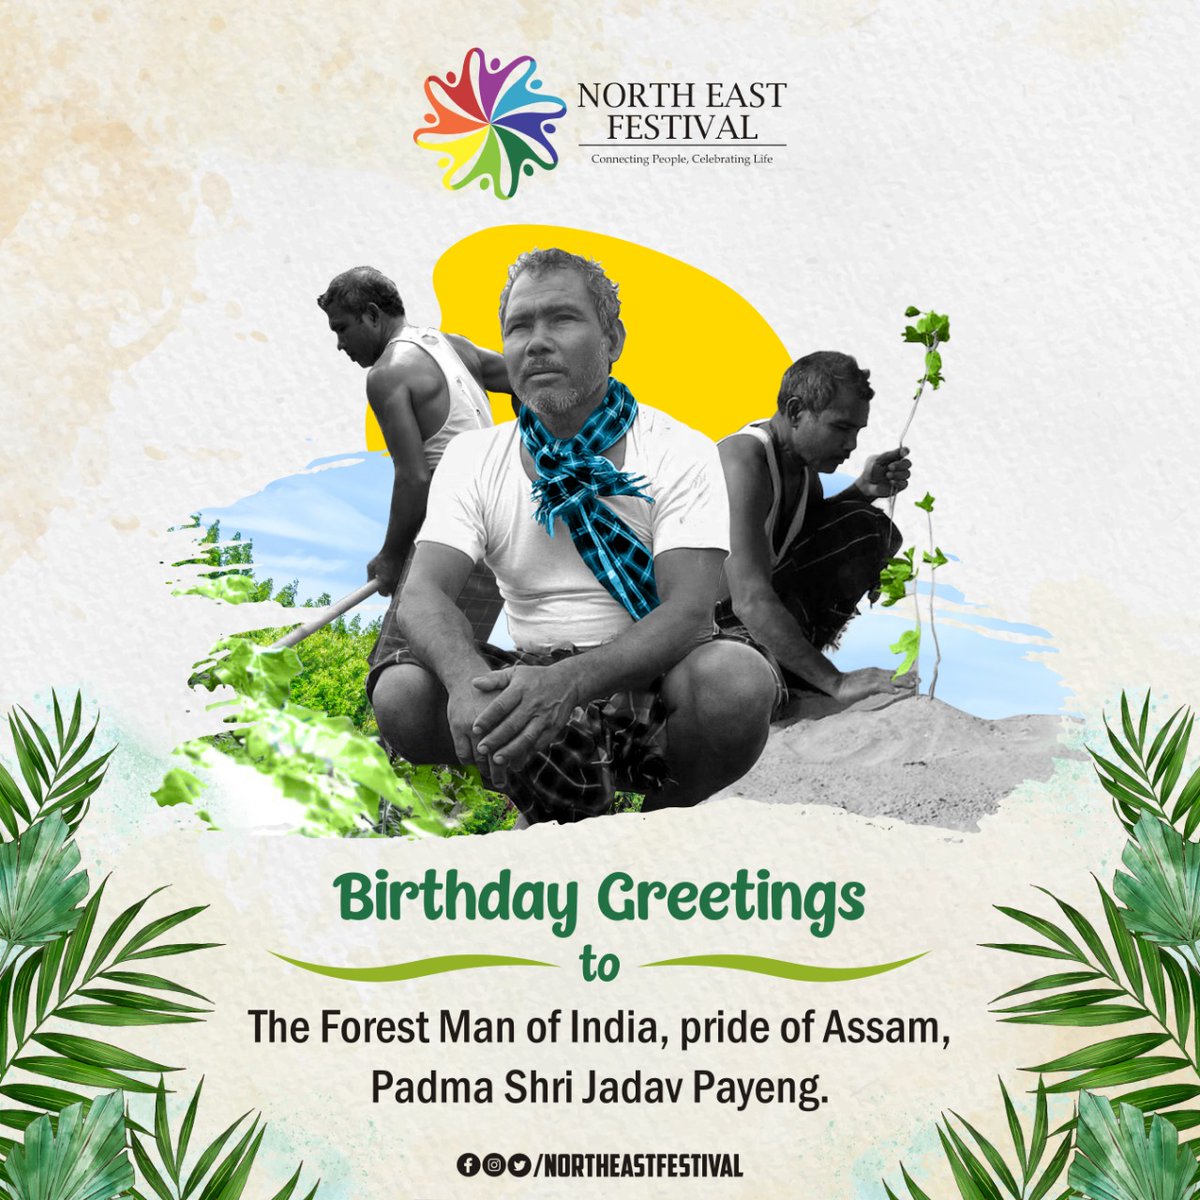 Birthday greetings to 'The Forest Man of India' Padma Shri Jadav Payeng. Wishing him good health and prosperity.
@aweassam  
@tourismgoi 
@assamtourism_  
.
#JadavPayeng #birthday #happybirthdayjadavpayeng #forestmanofIndia #assam #majuli #forest #nature